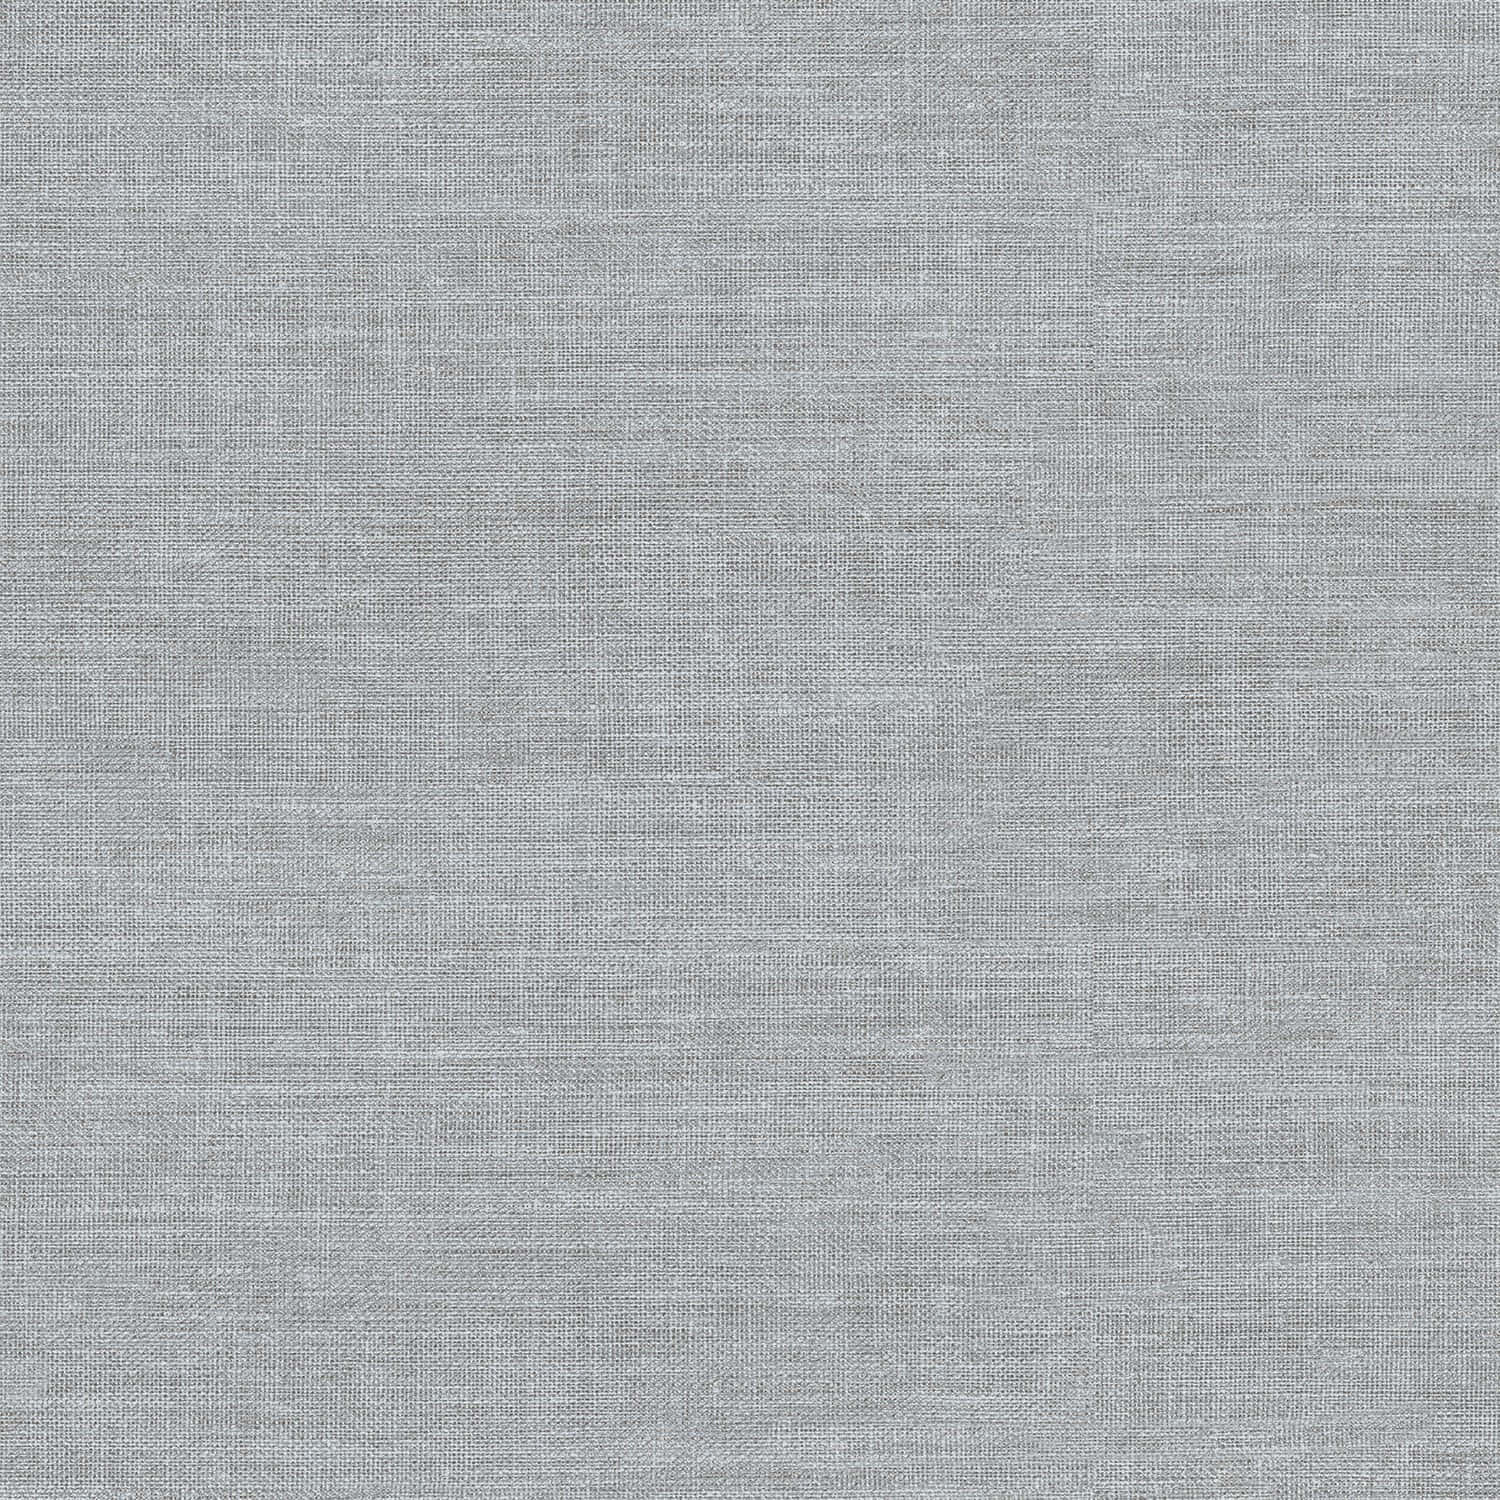 Minimalistic Gray Gradient Background